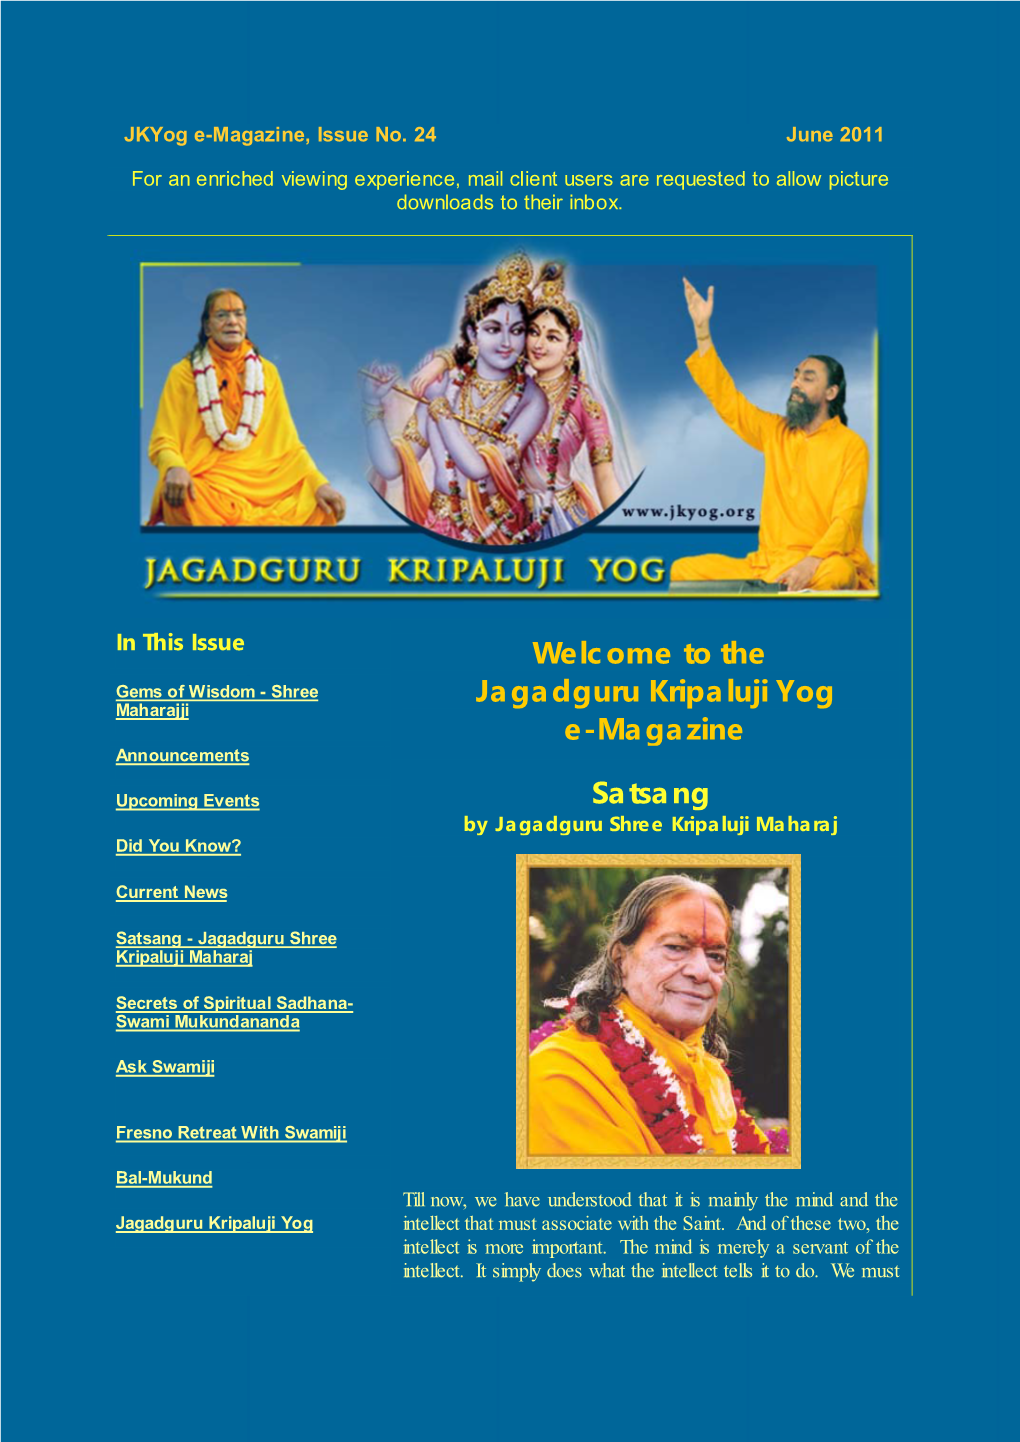 Jagadguru Kripaluji Yog E-Magazine: Twenty Fourth Edition, June 2011